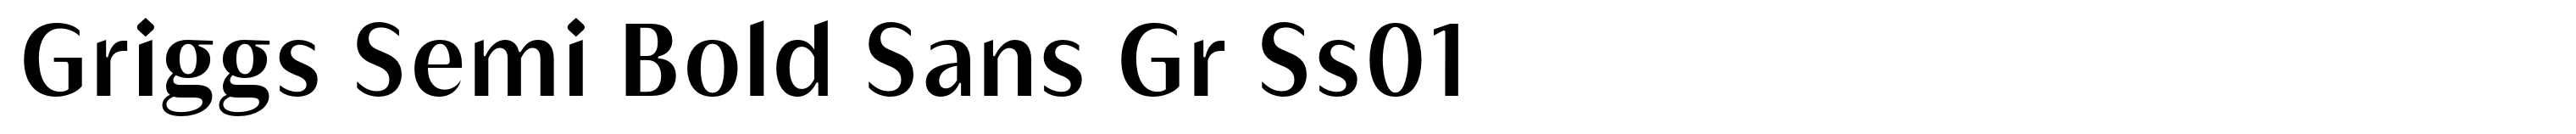 Griggs Semi Bold Sans Gr Ss01